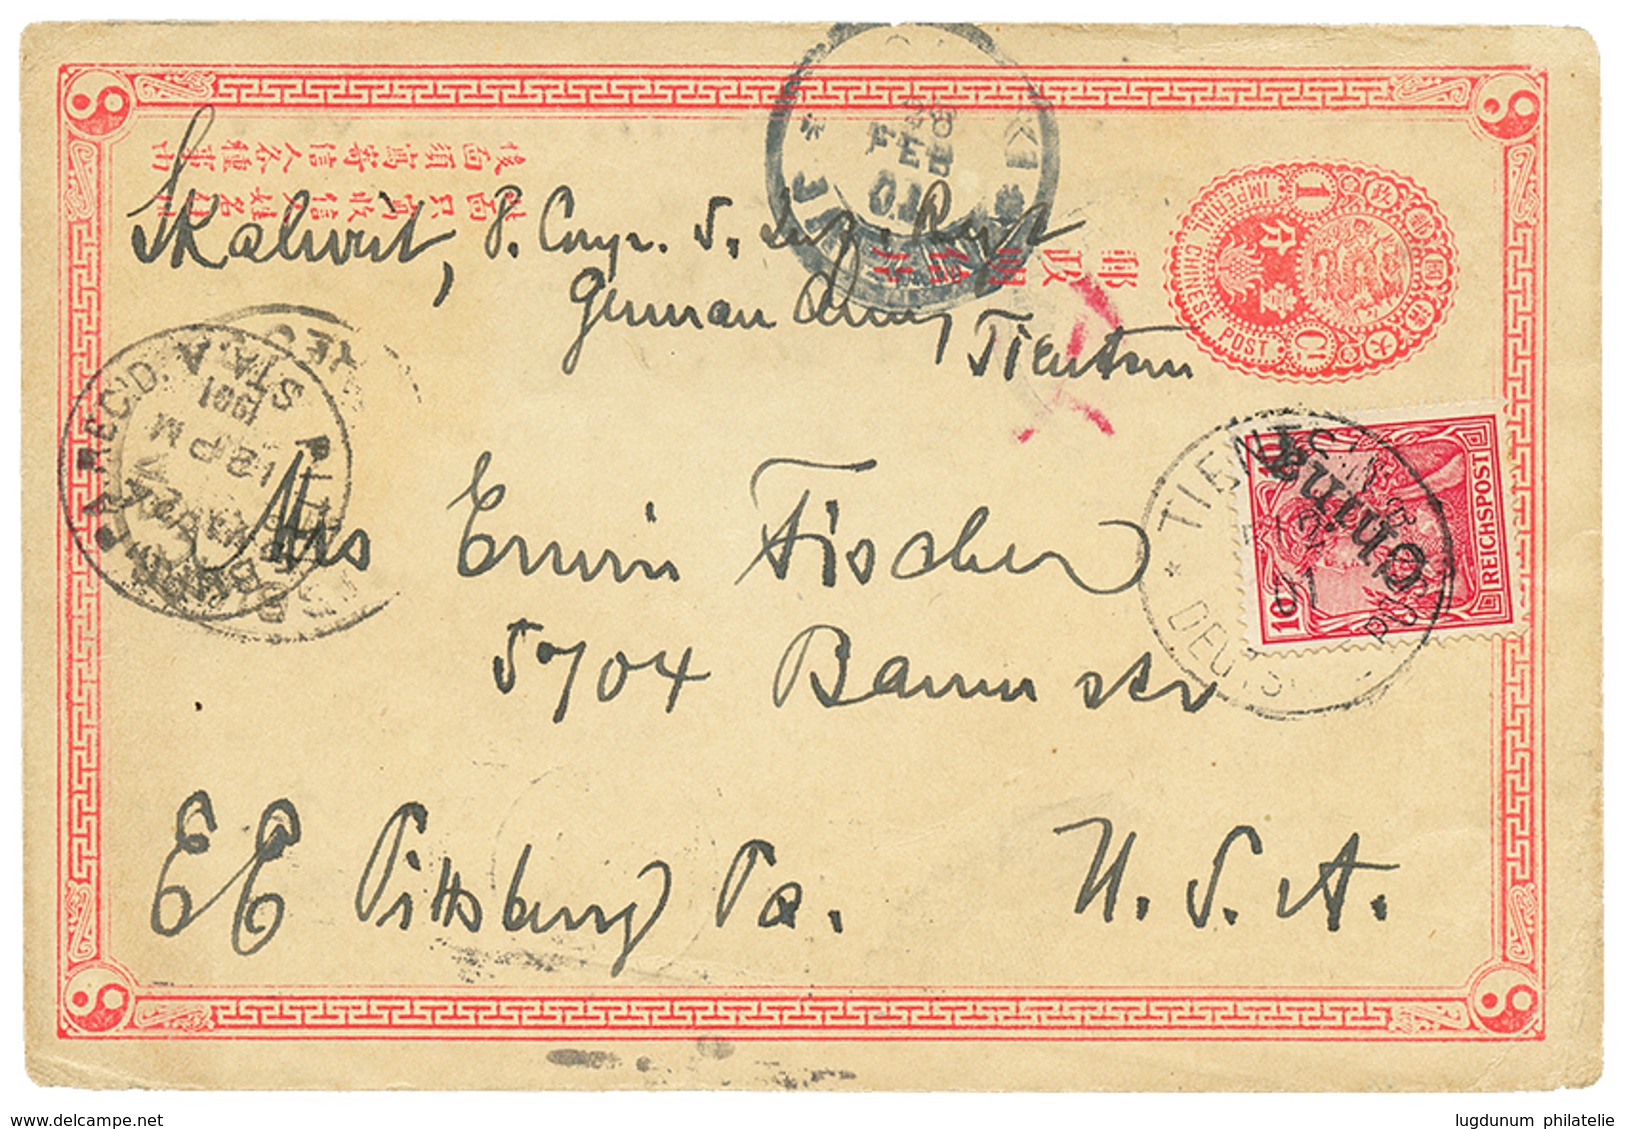 575 1901 10pf(n°10) Canc. TIENTSIN On Chinese POSTAL STATIONERY To PITTSBURG (USA). Very Scarce. Certificates JÄSCHKE-LA - Cina (uffici)